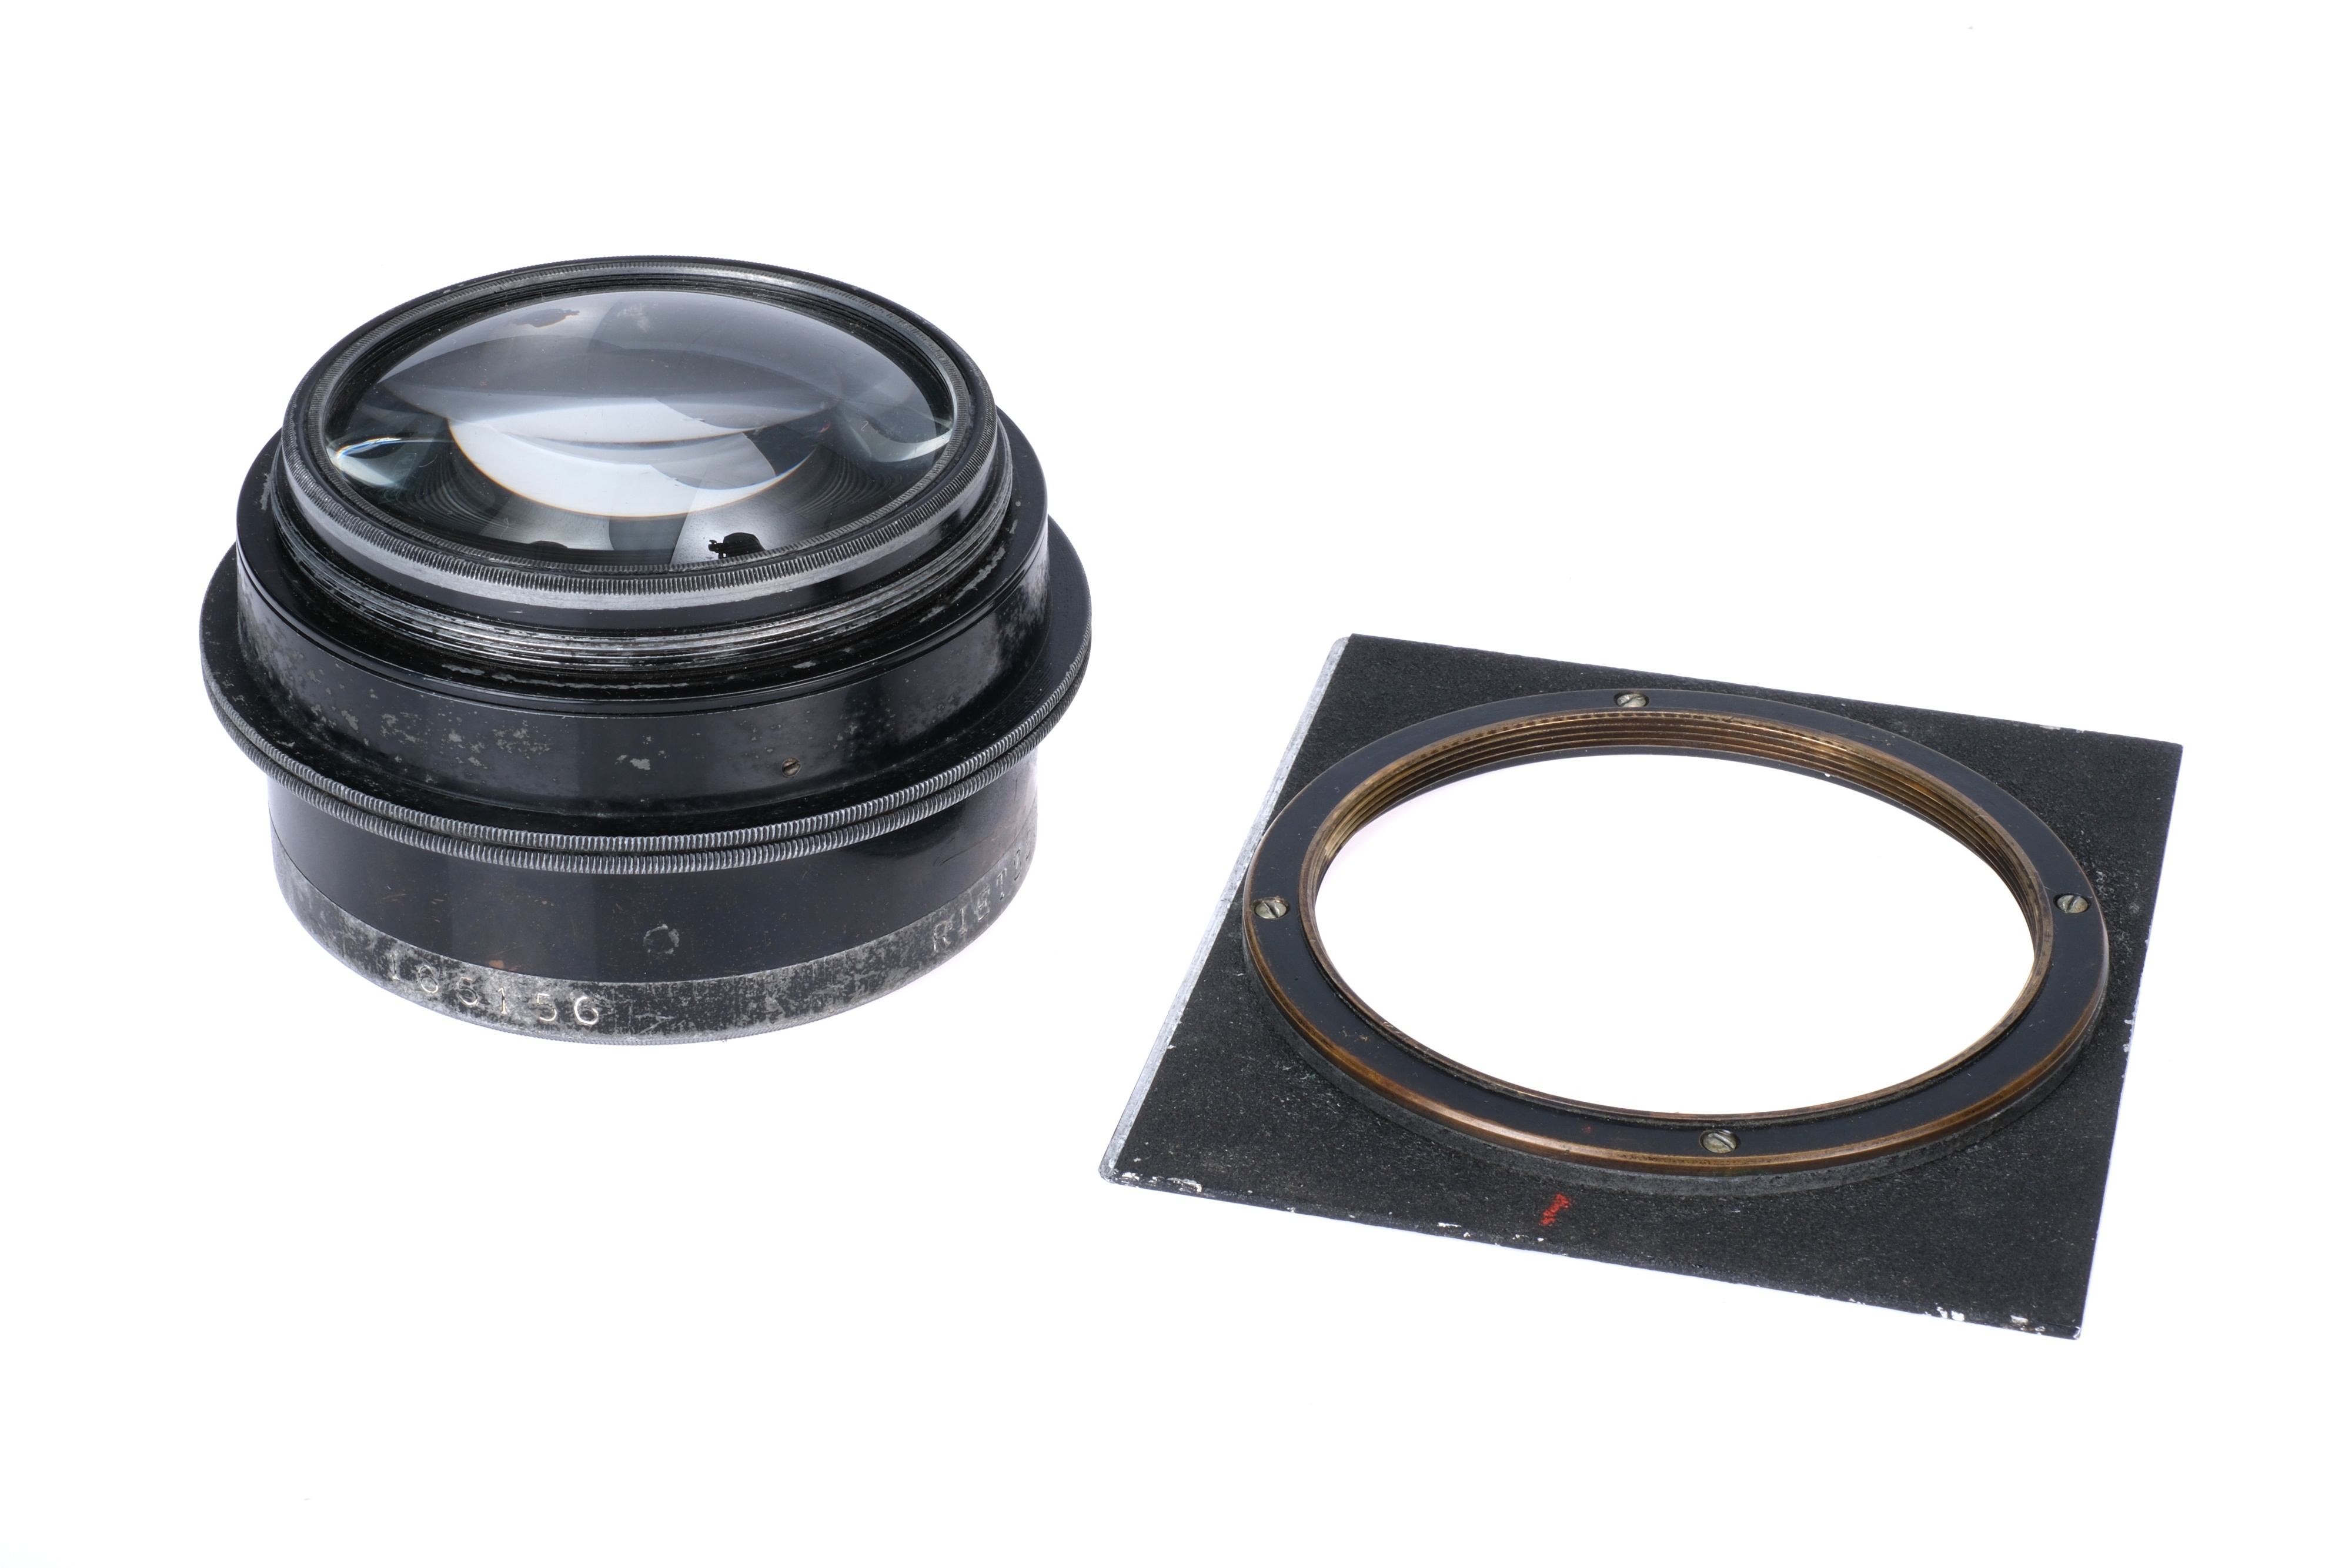 A Rietzchel Prolinear f/1.9 135mm Lens, - Image 6 of 6